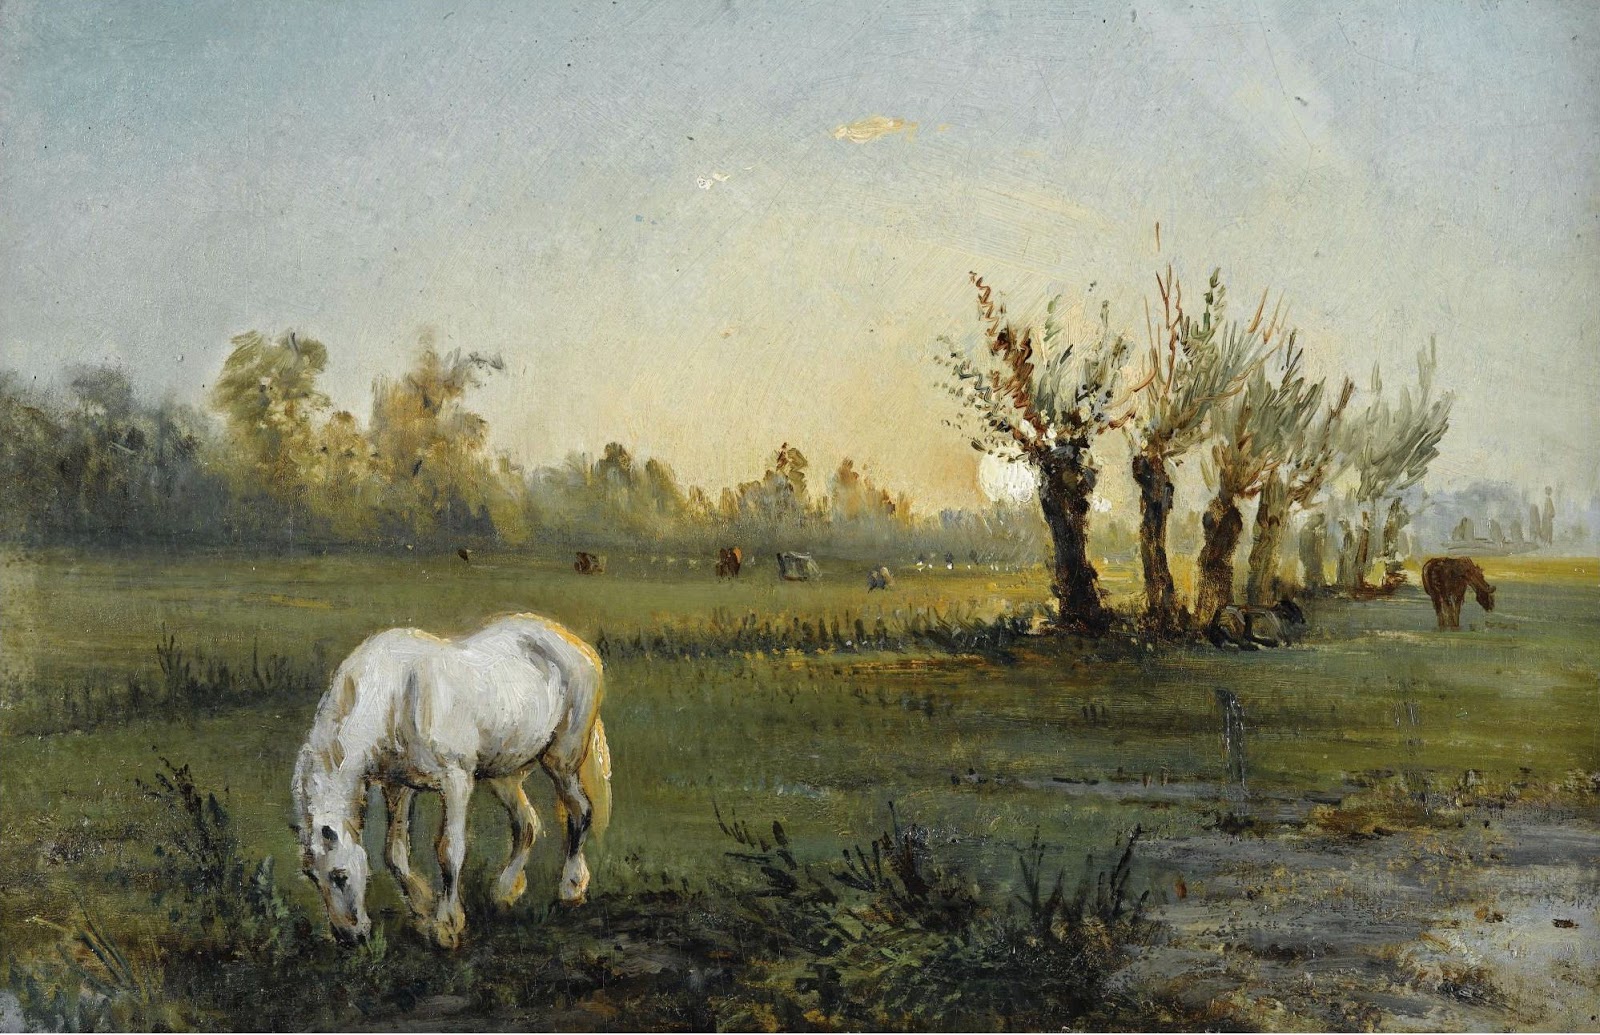 Camille+Pissarro-1830-1903 (442).jpg